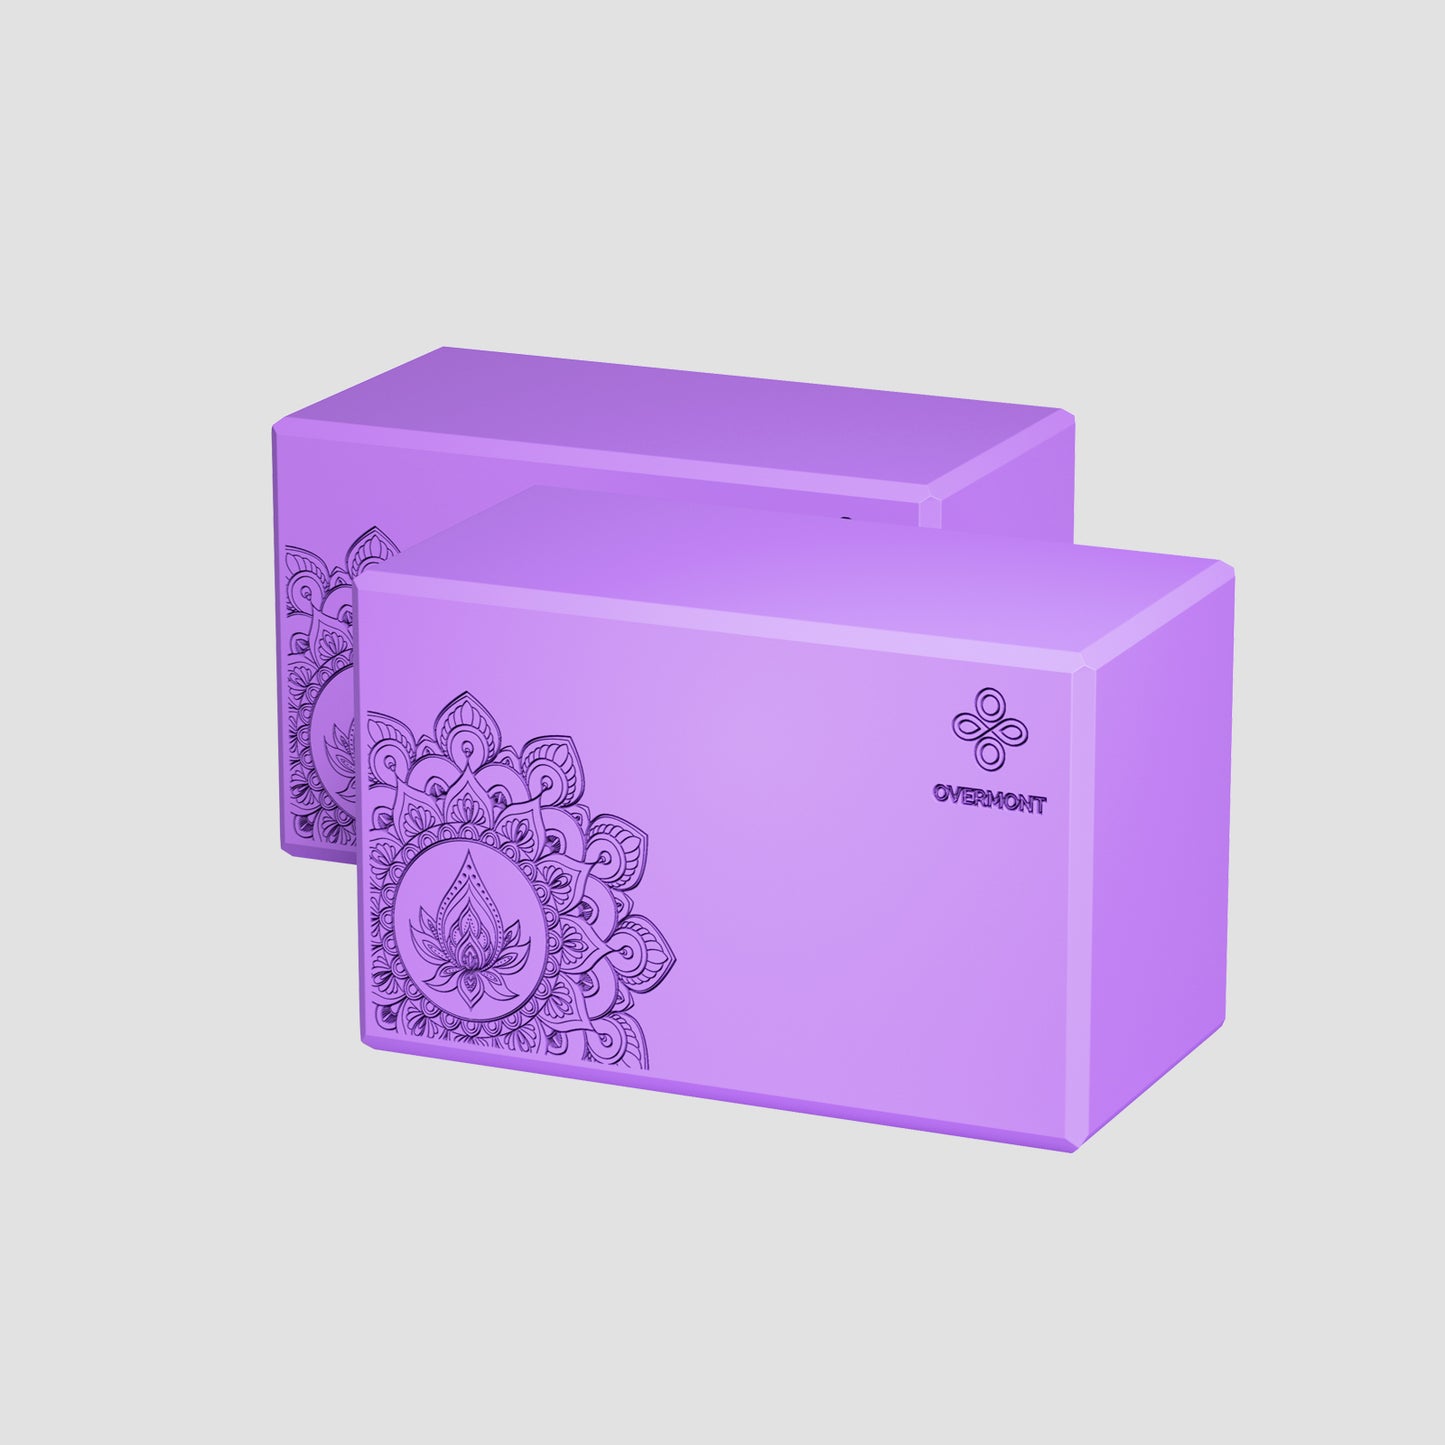 1 pair purple yoga blocks